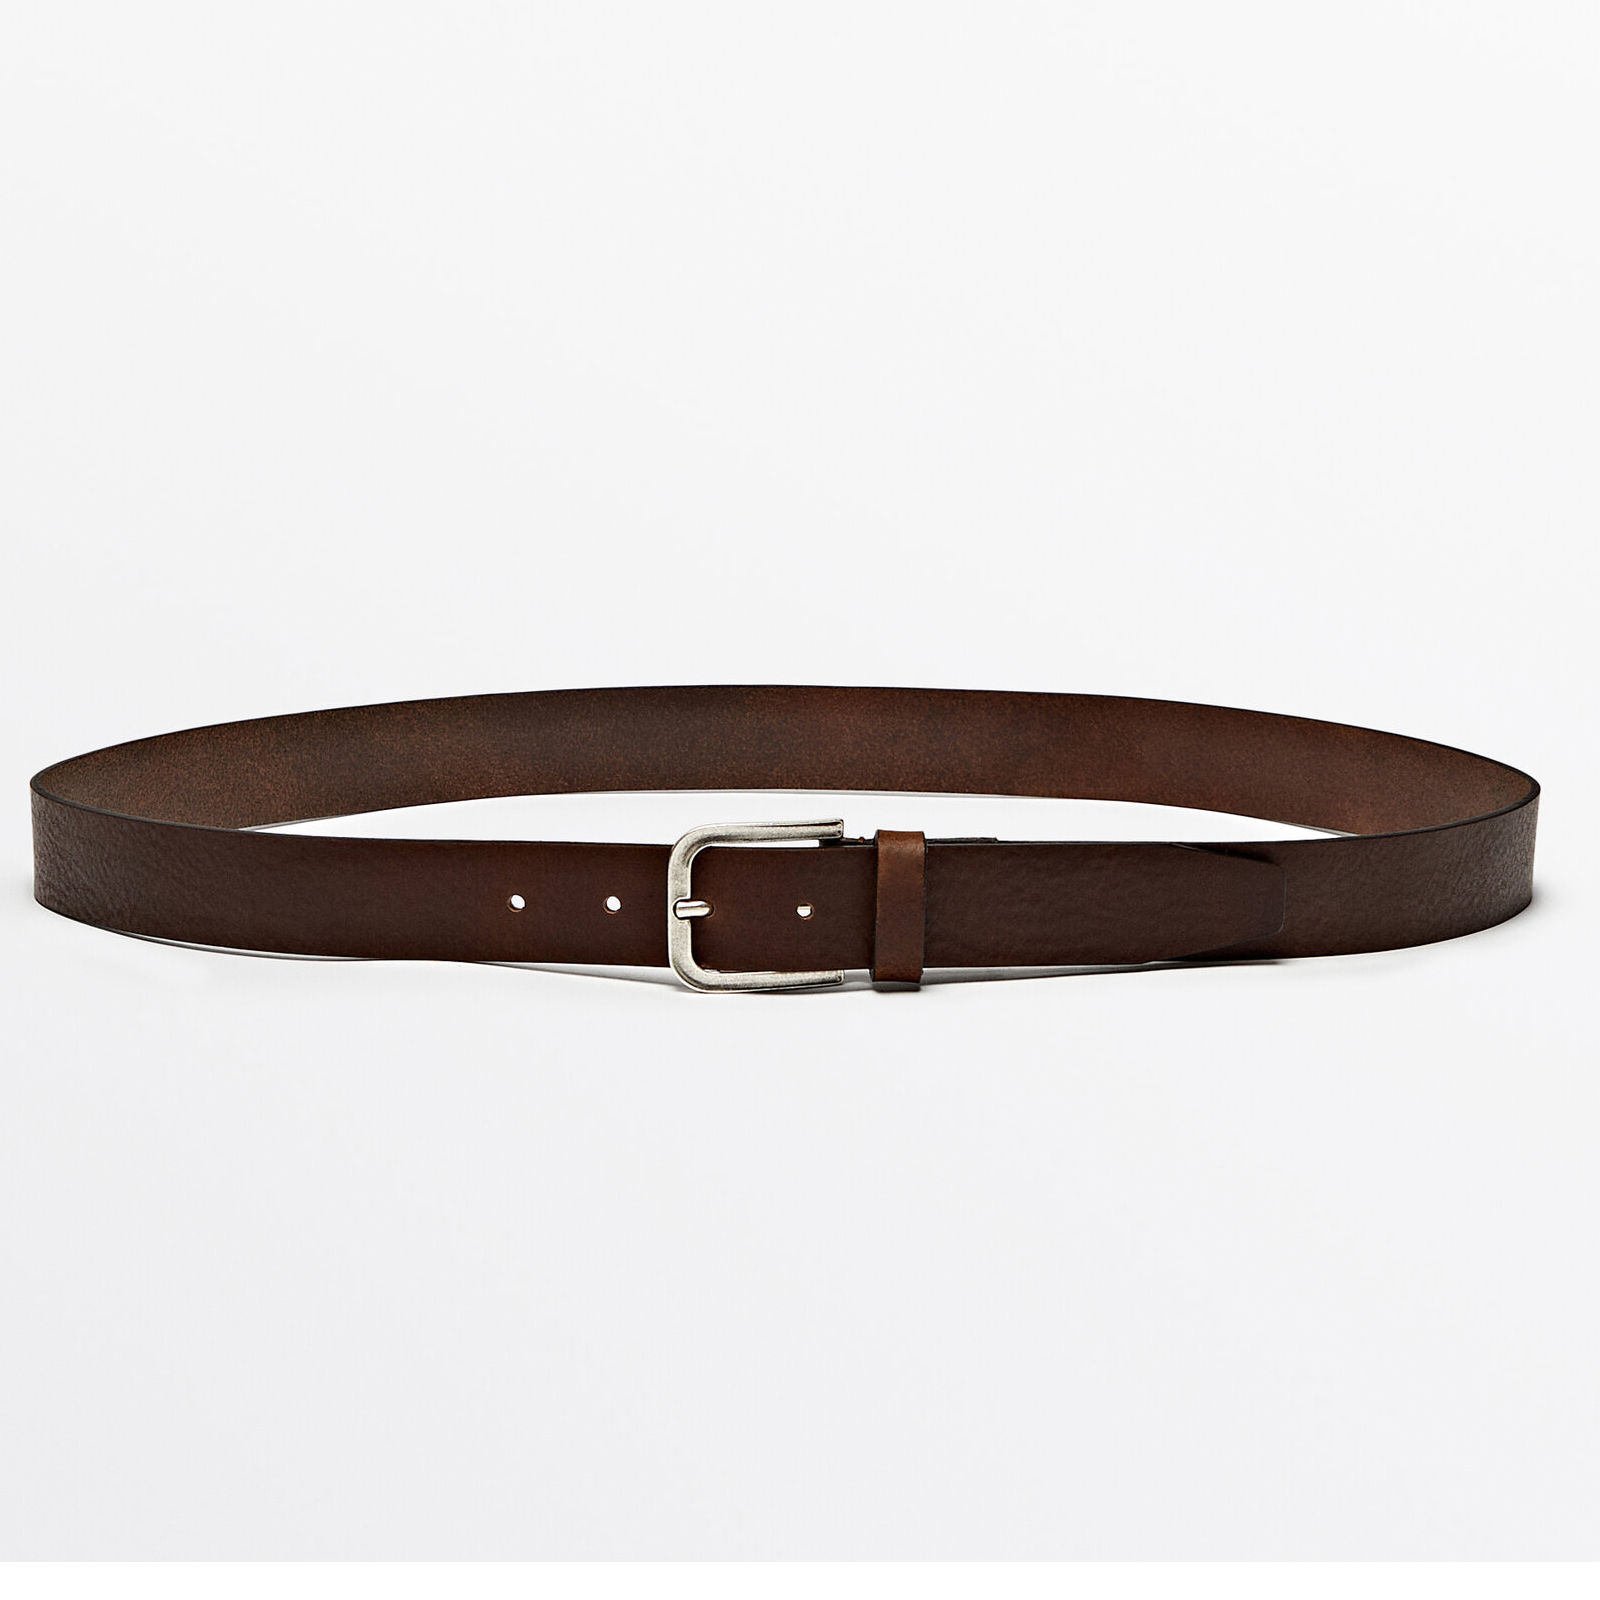 Ремень Massimo Dutti Nappa Leather, коричневый ремень massimo dutti leather belt thin limited edition чёрный